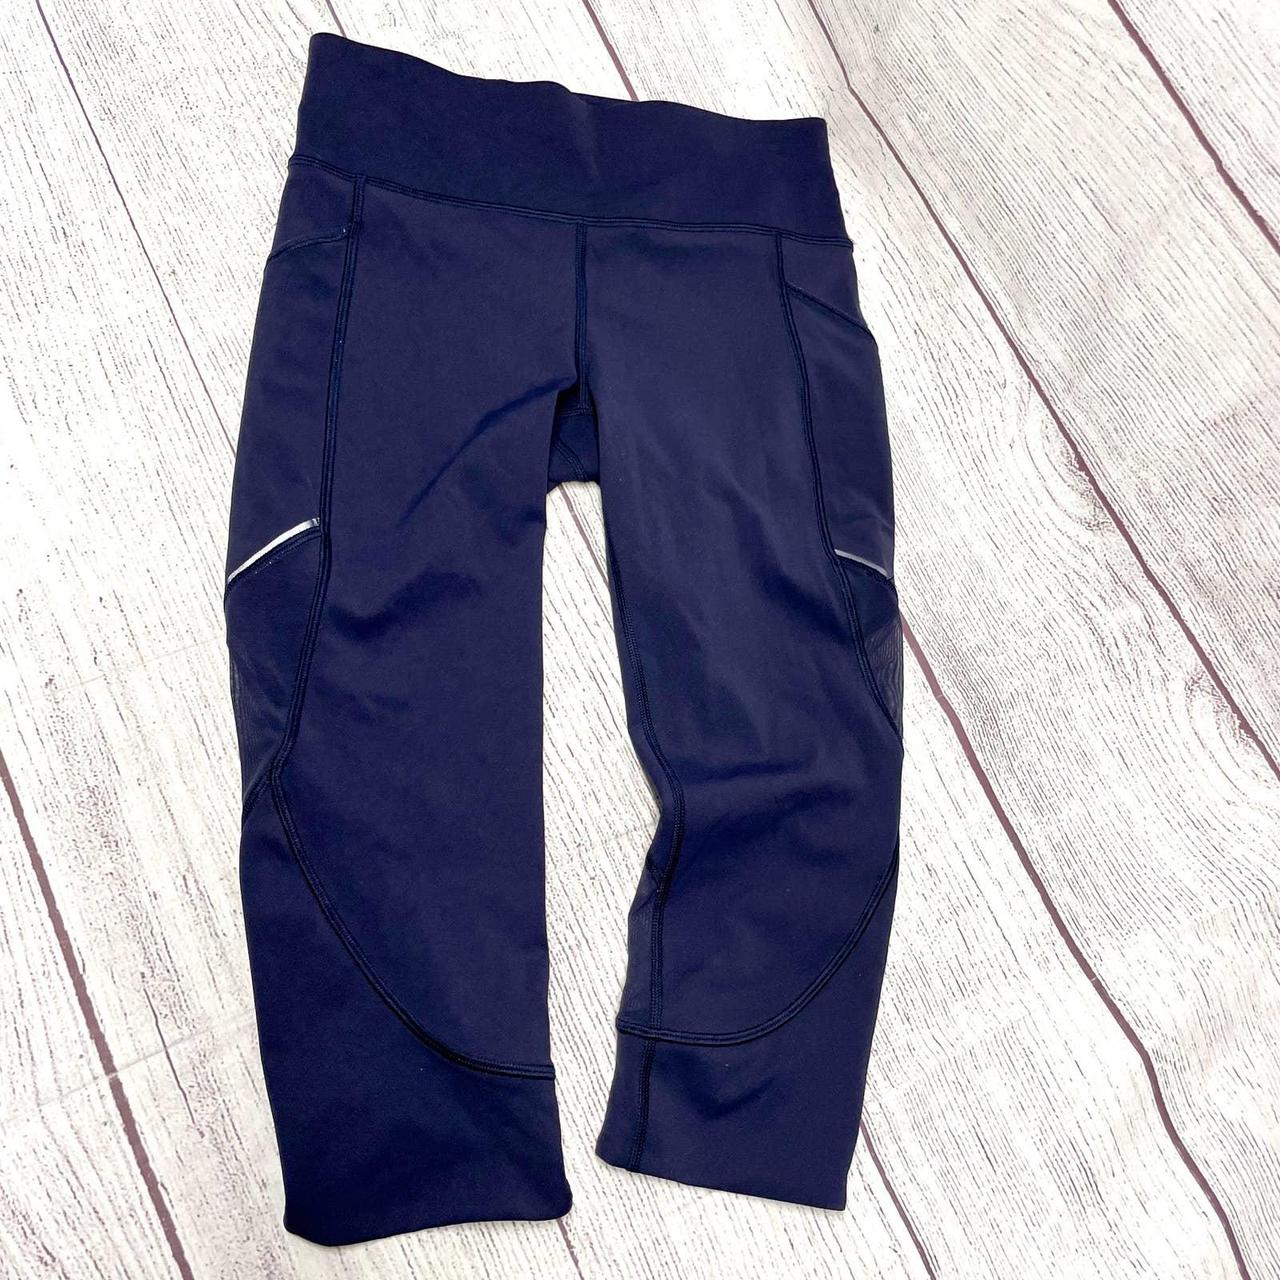 navy blue lululemon leggings - Depop